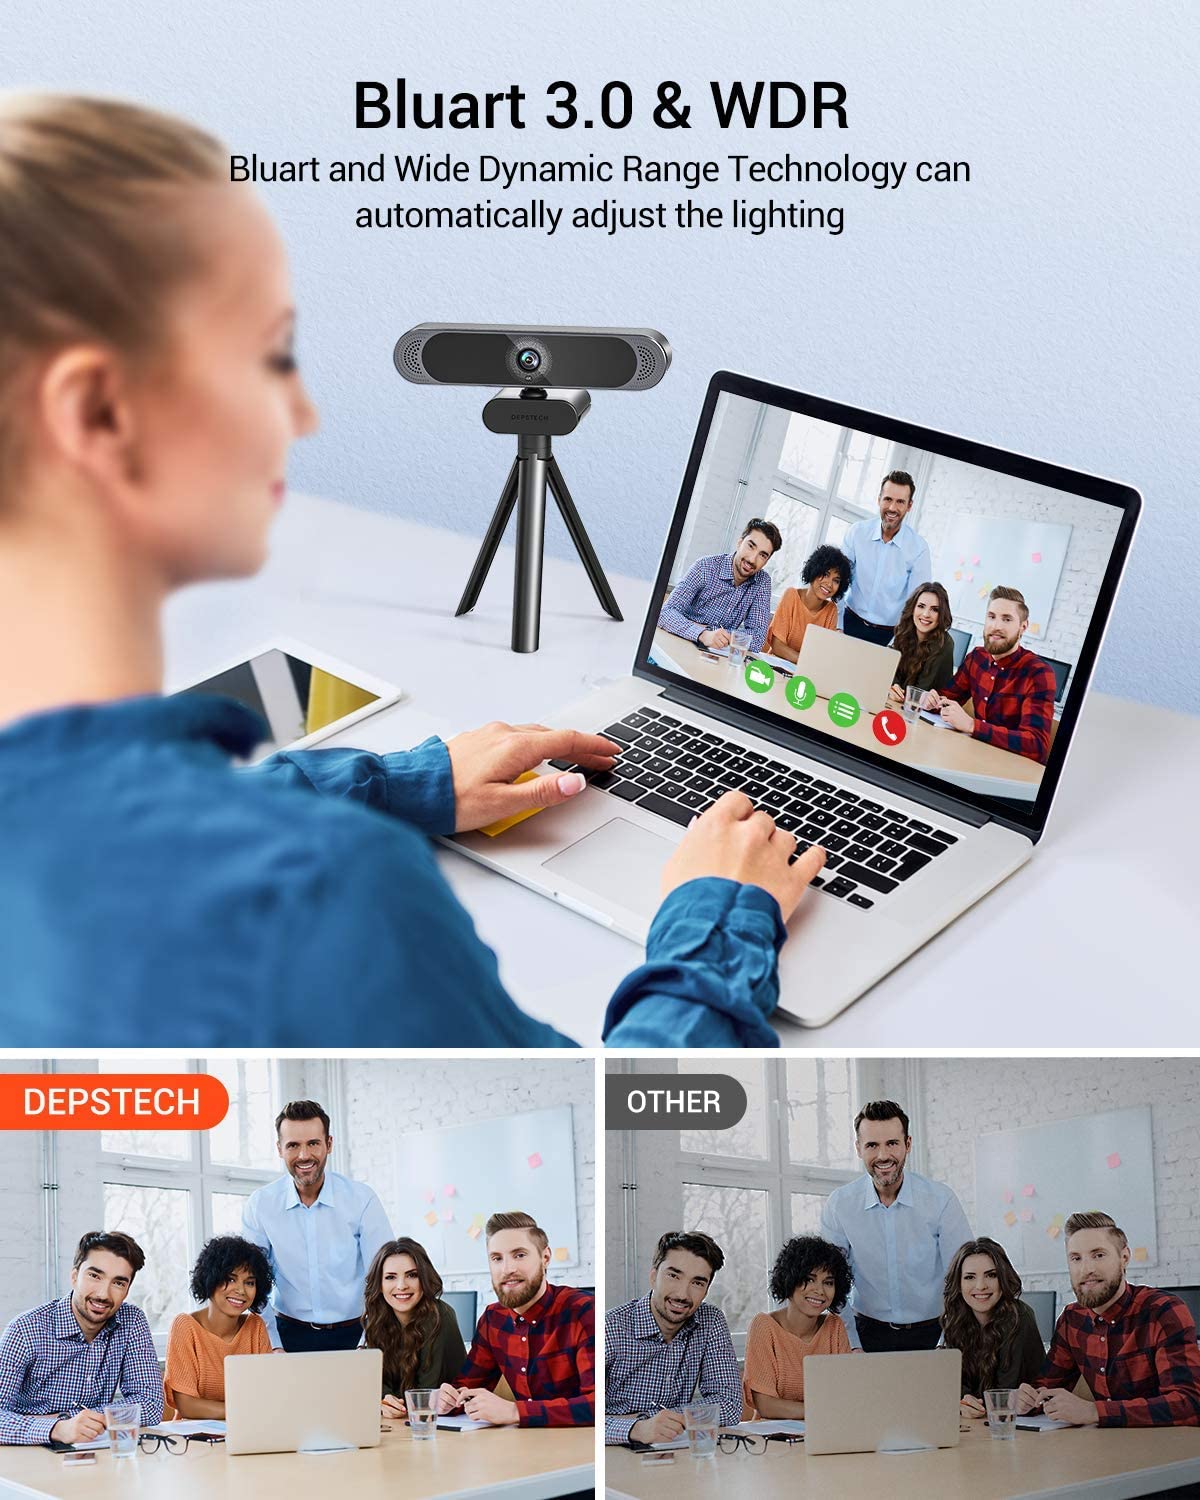 4K HD Webcam with Microphone Autofocus Noise-Canceling